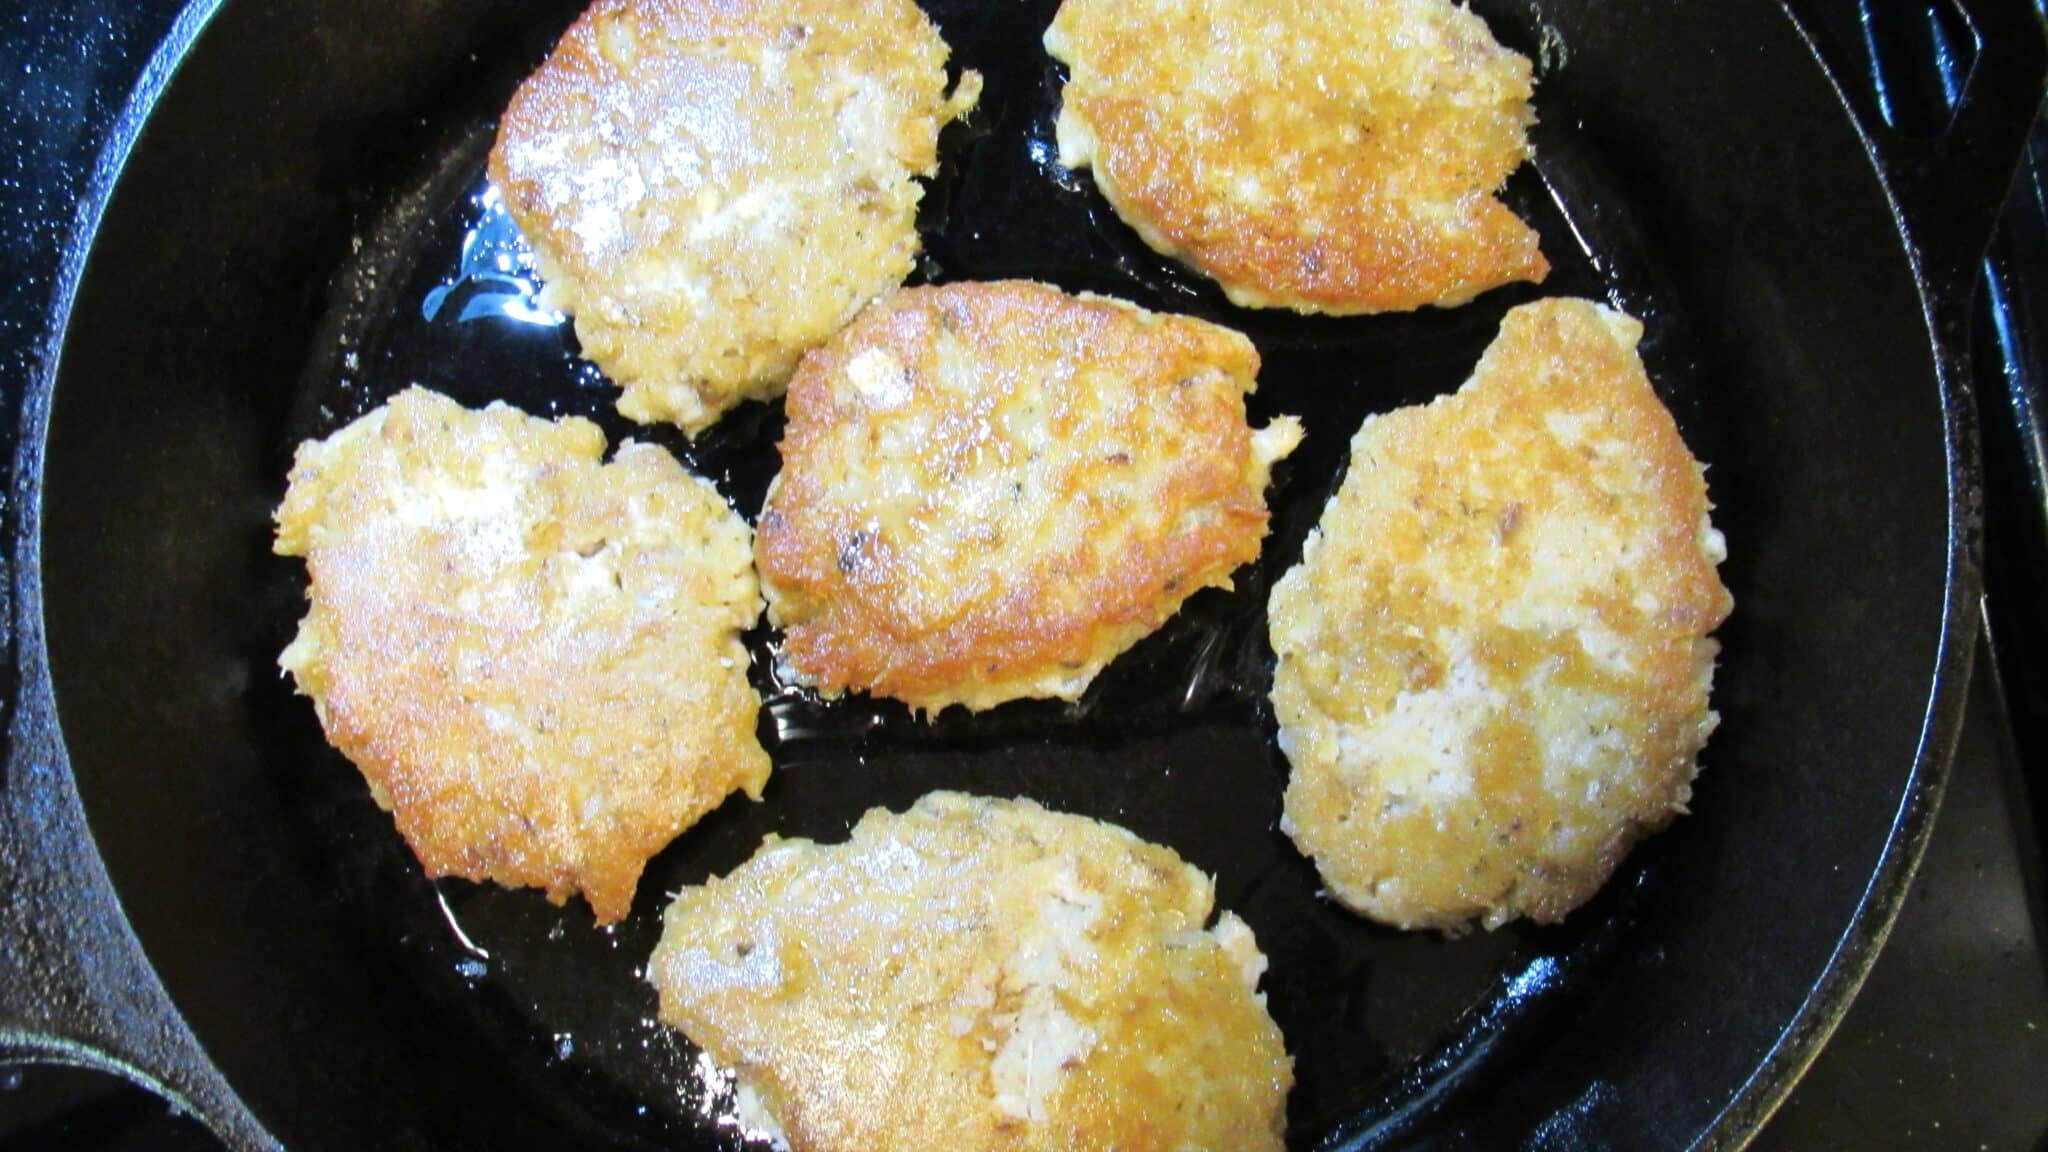 Six salmon patties fried in a cast-iron skillet.